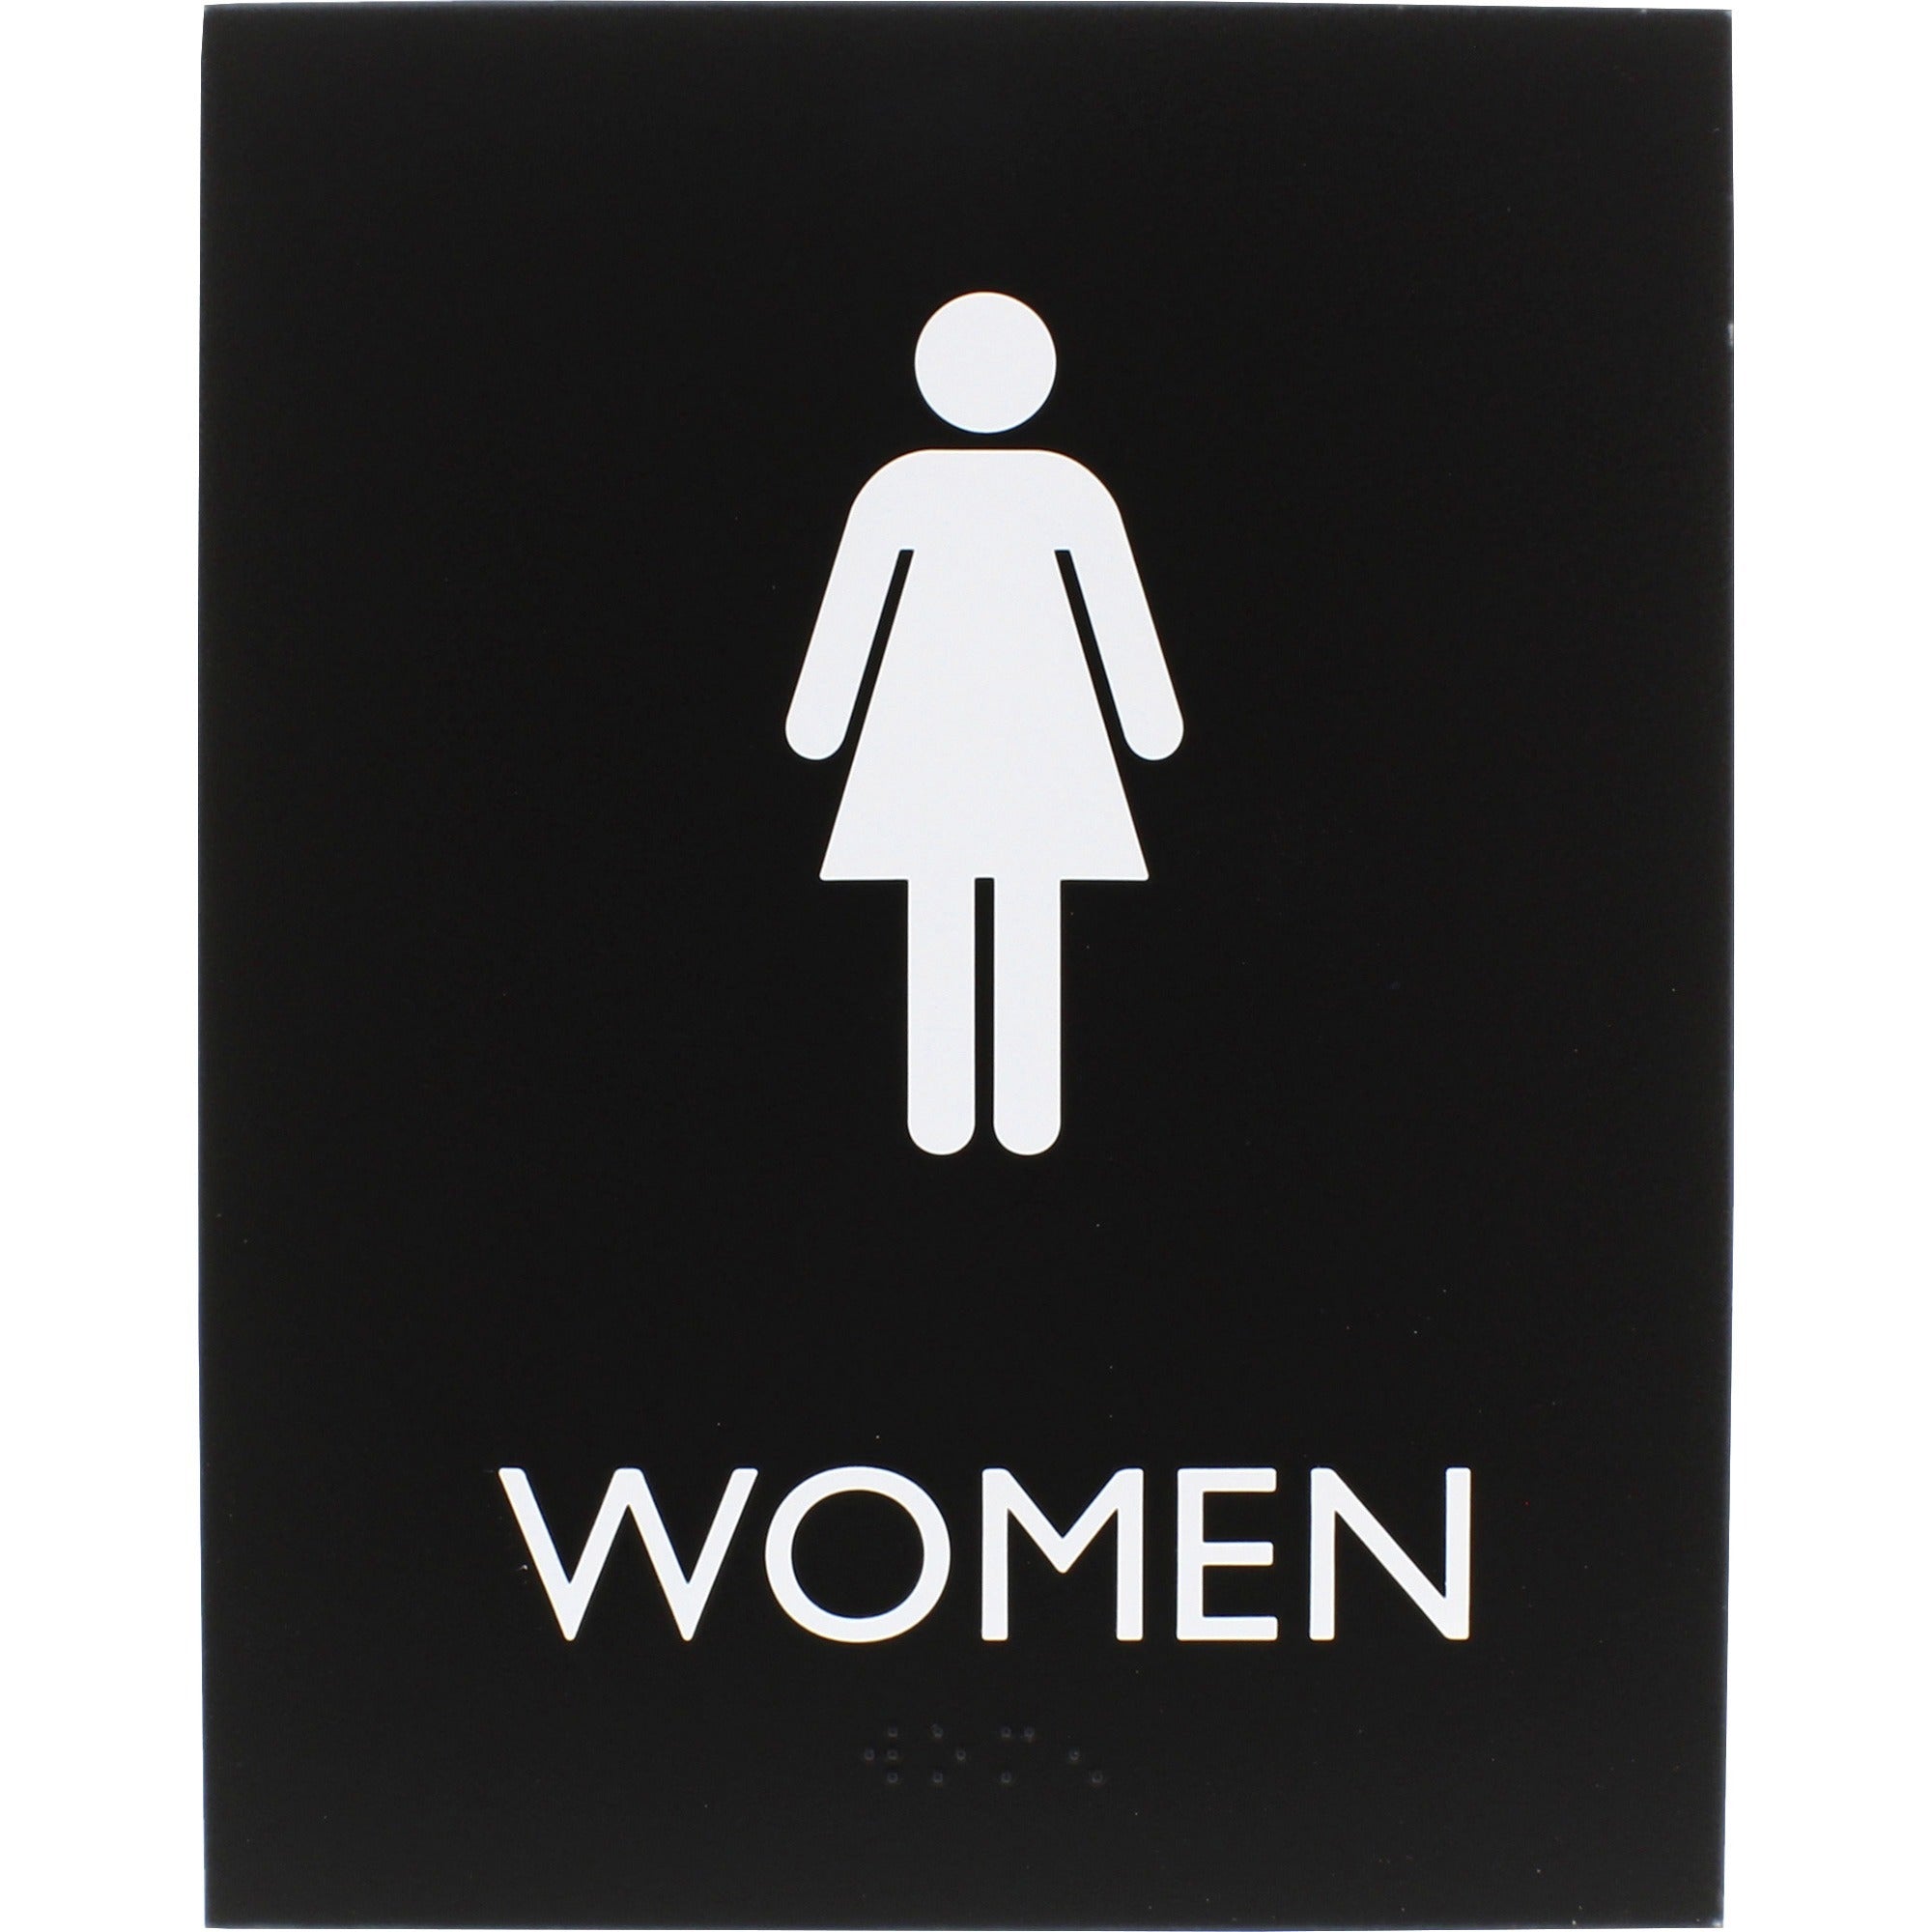 lorell-womens-restroom-sign-1-each-women-print-message-64-width-x-85-height-rectangular-shape-surface-mountable-easy-readability-braille-plastic-black_llr02665 - 1